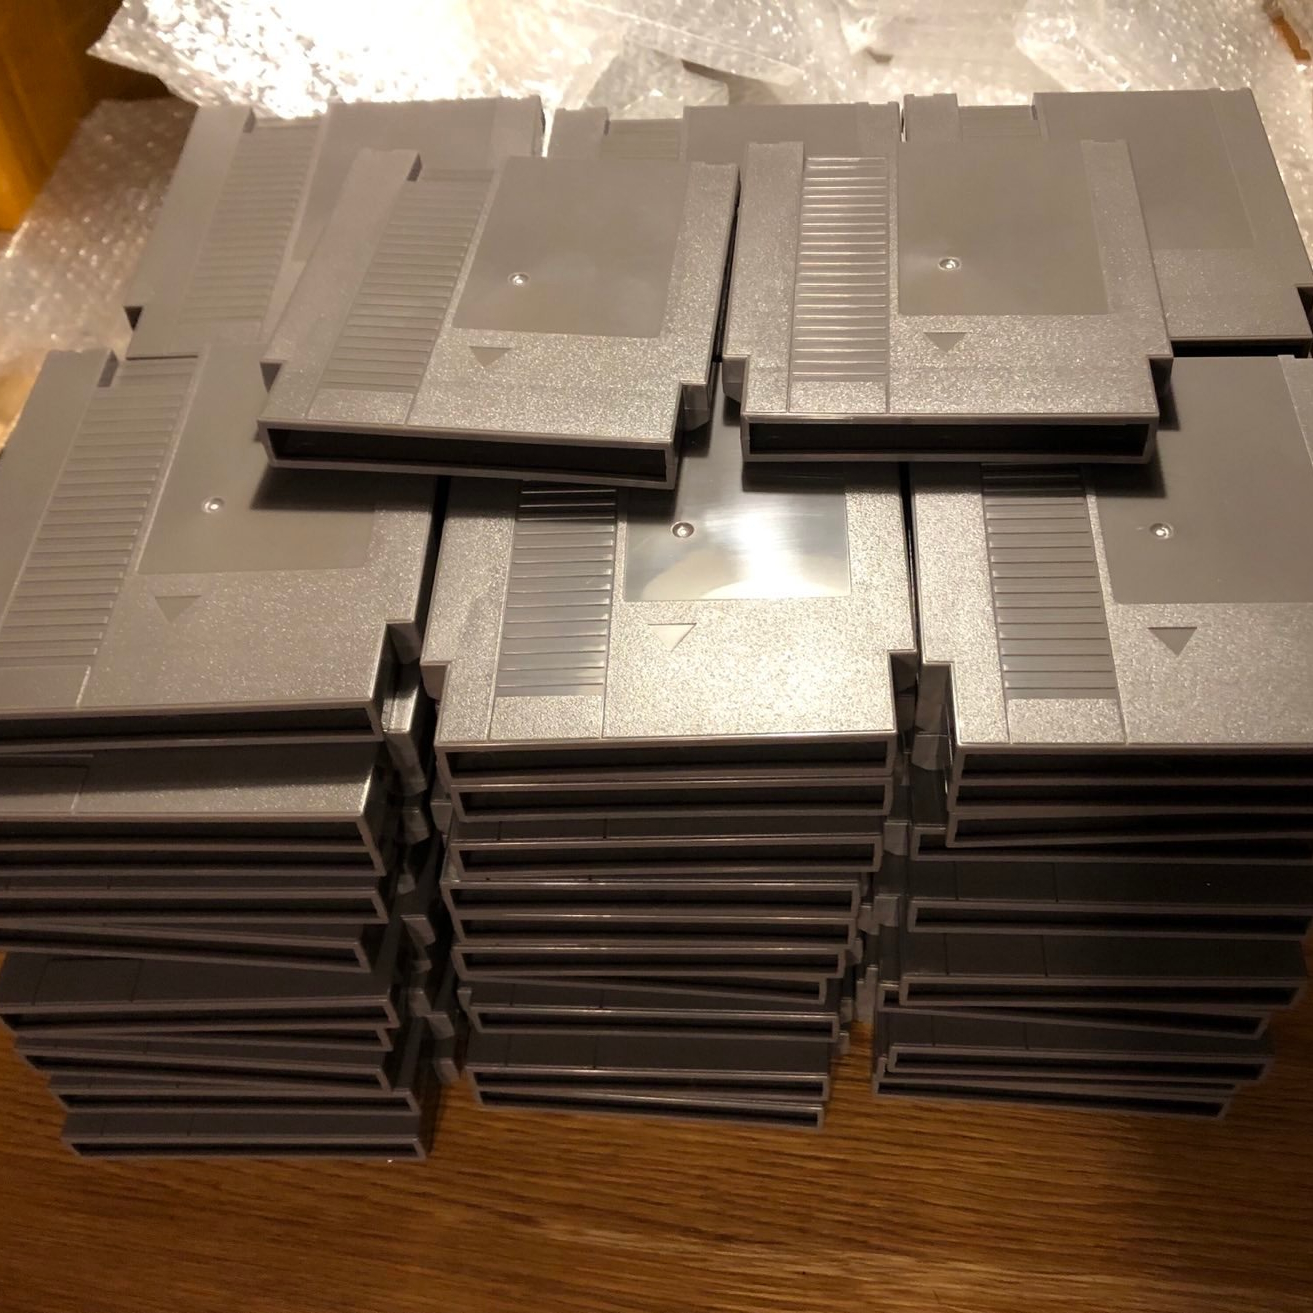 Sam's Journey NES Cartridges 1